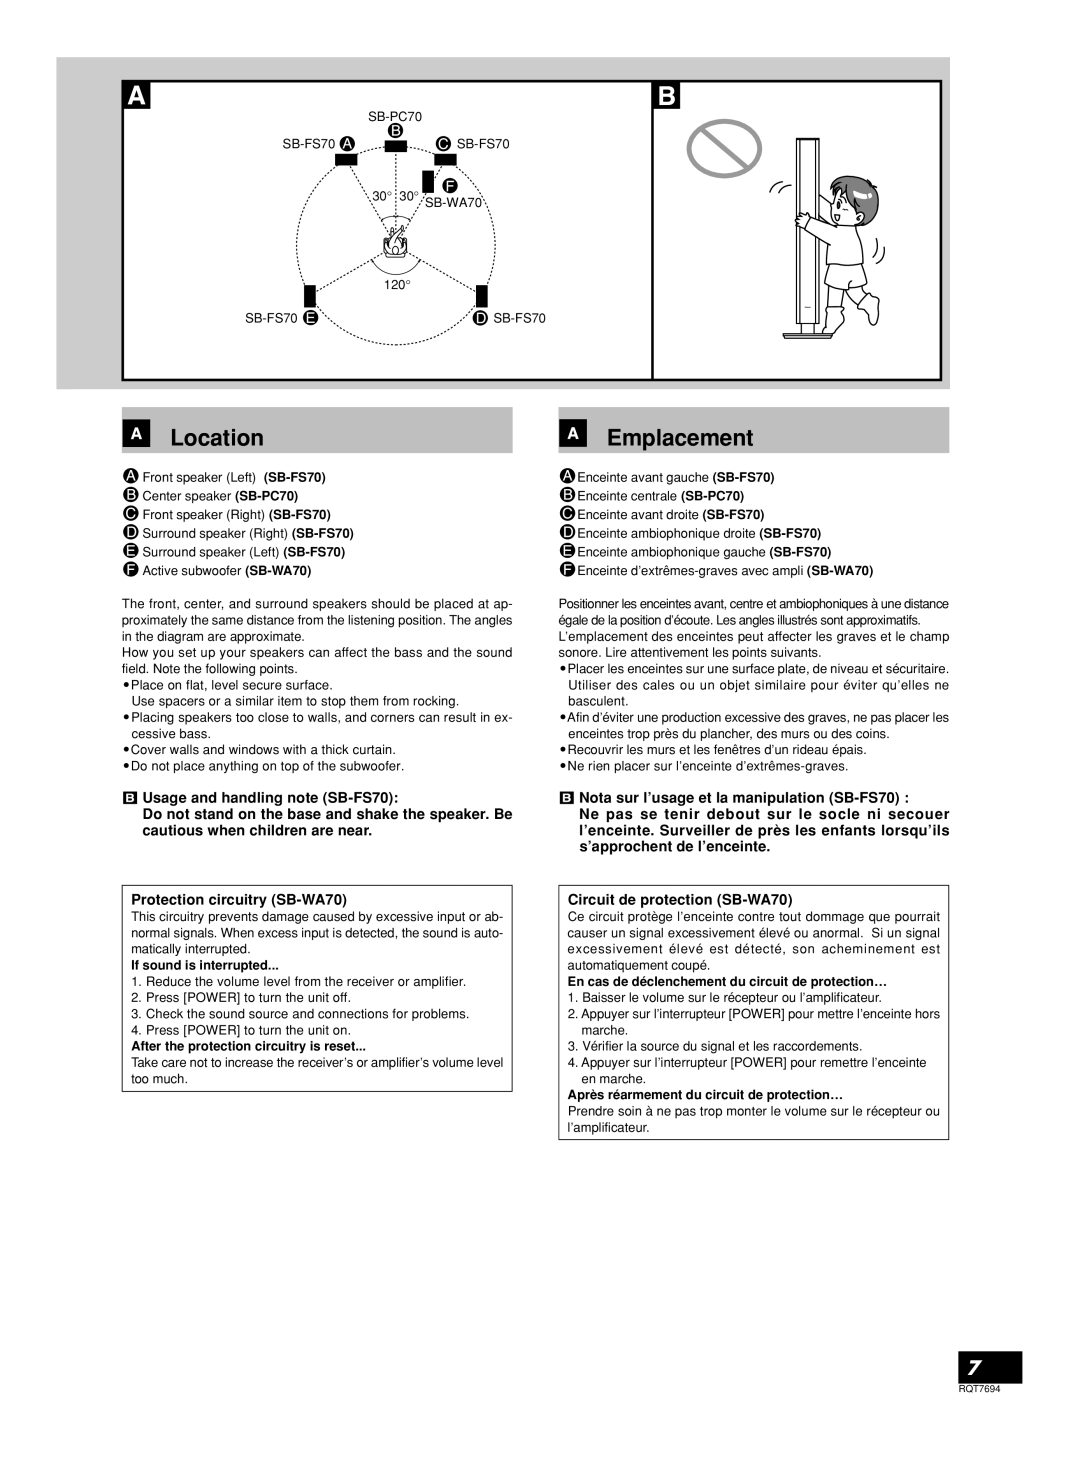 Panasonic SB-TP70 manuel dutilisation Location, Emplacement, Usage and handling note SB-FS70, Protection circuitry SB-WA70 